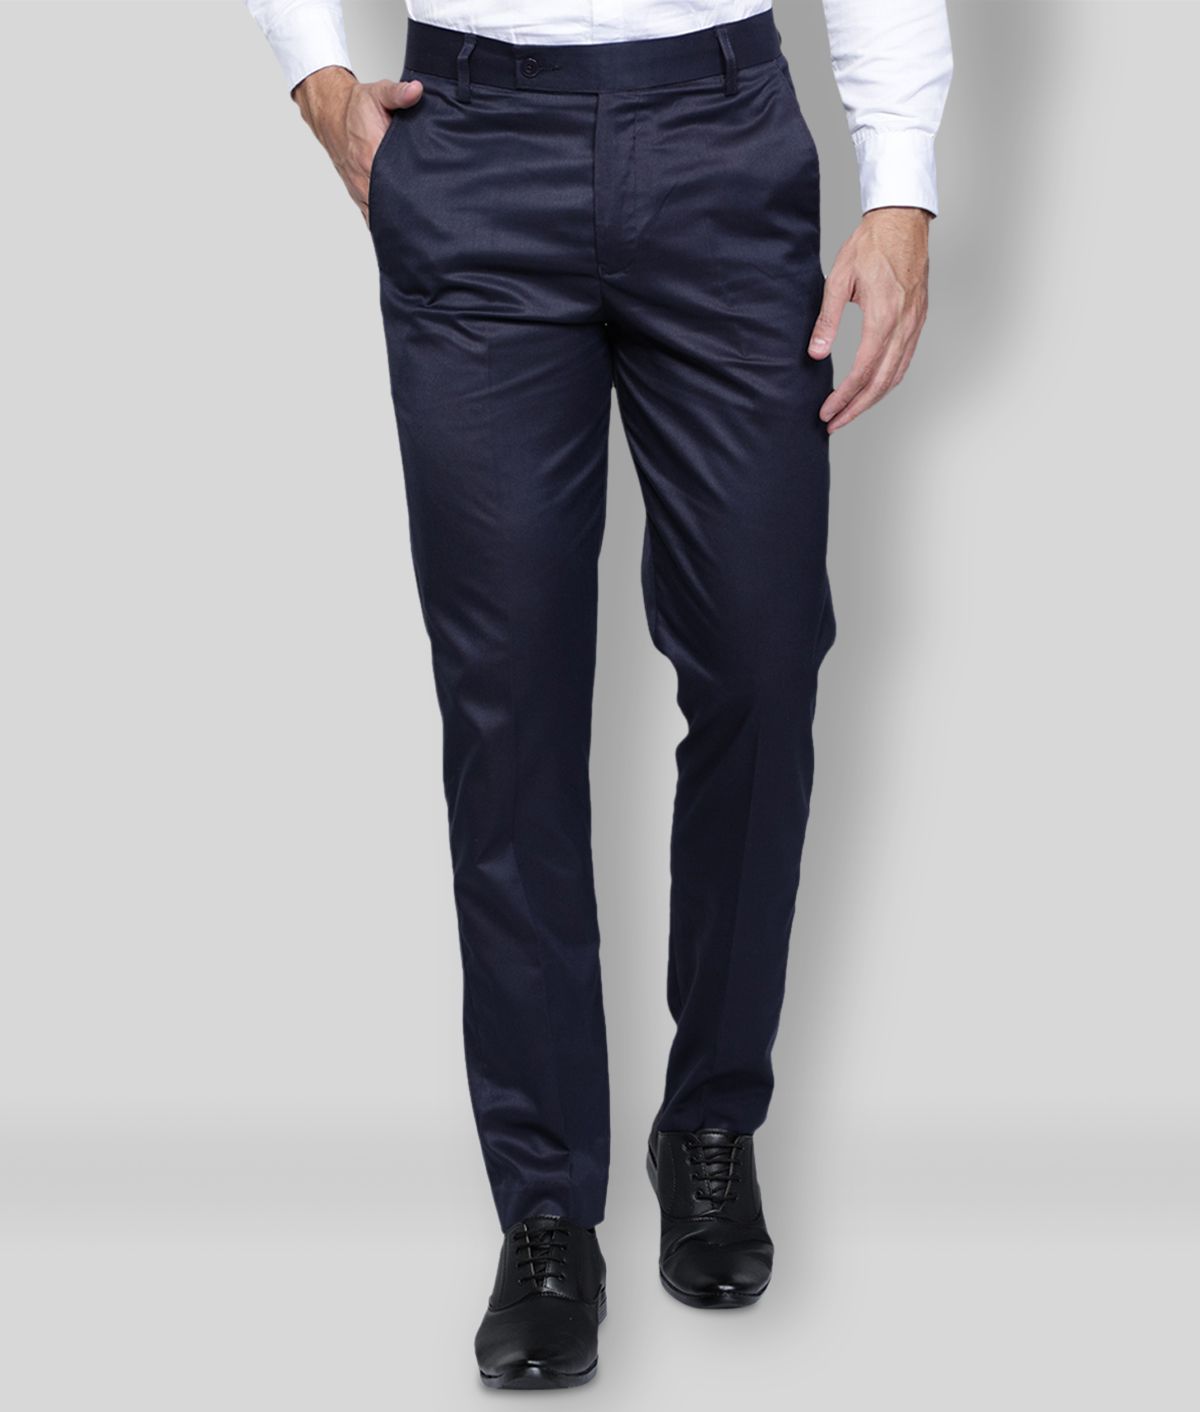     			Haul Chic - Blue Cotton Blend Slim Fit Men's Formal Pants (Pack of 1)